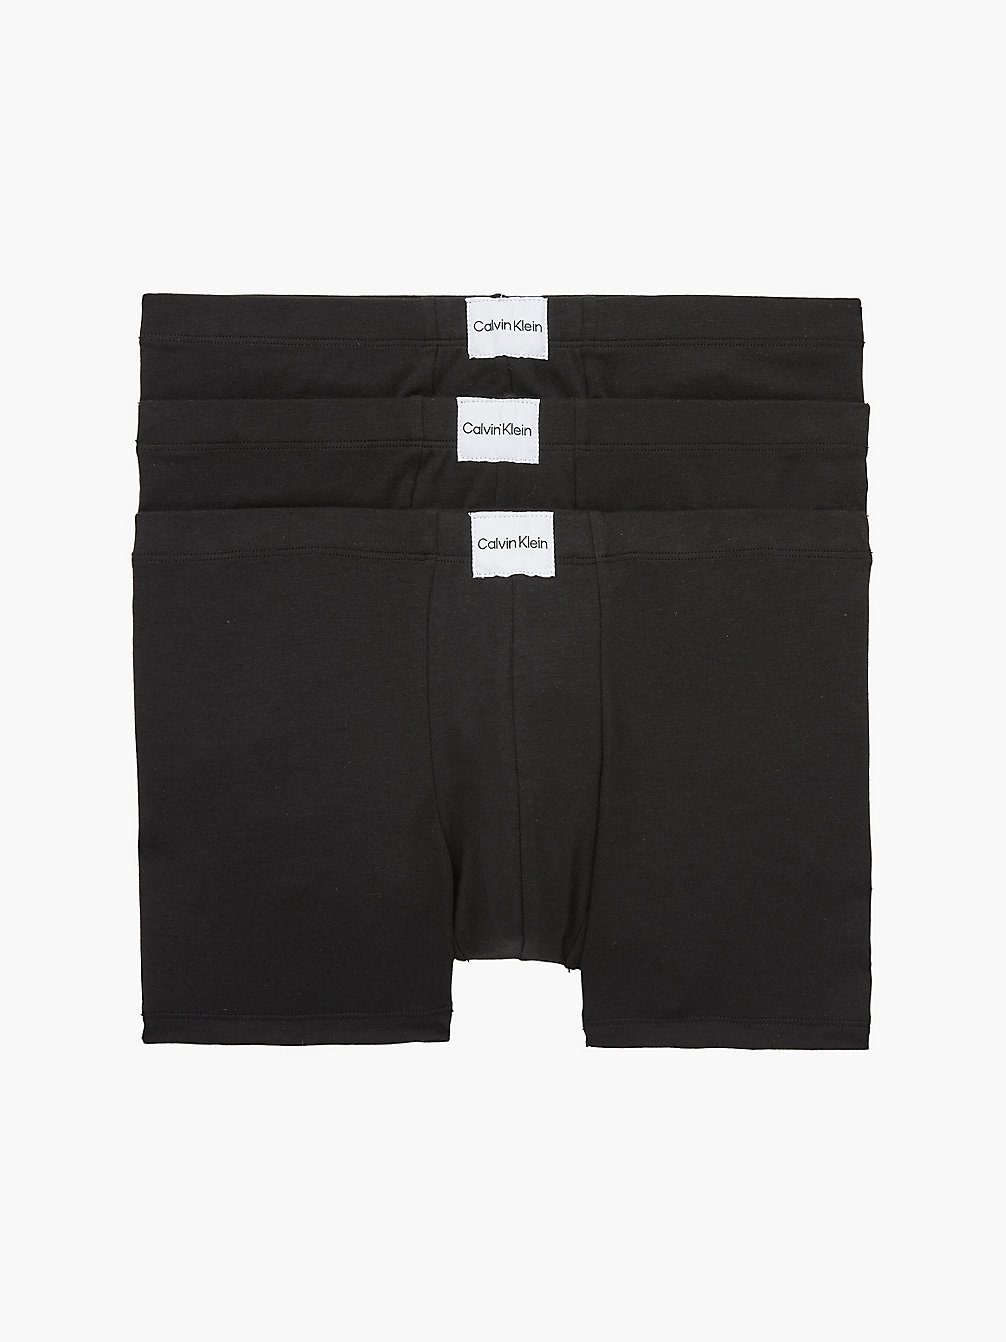 BLACK/ BLACK/ BLACK 3 Pack Trunks - Pure Cotton undefined men Calvin Klein